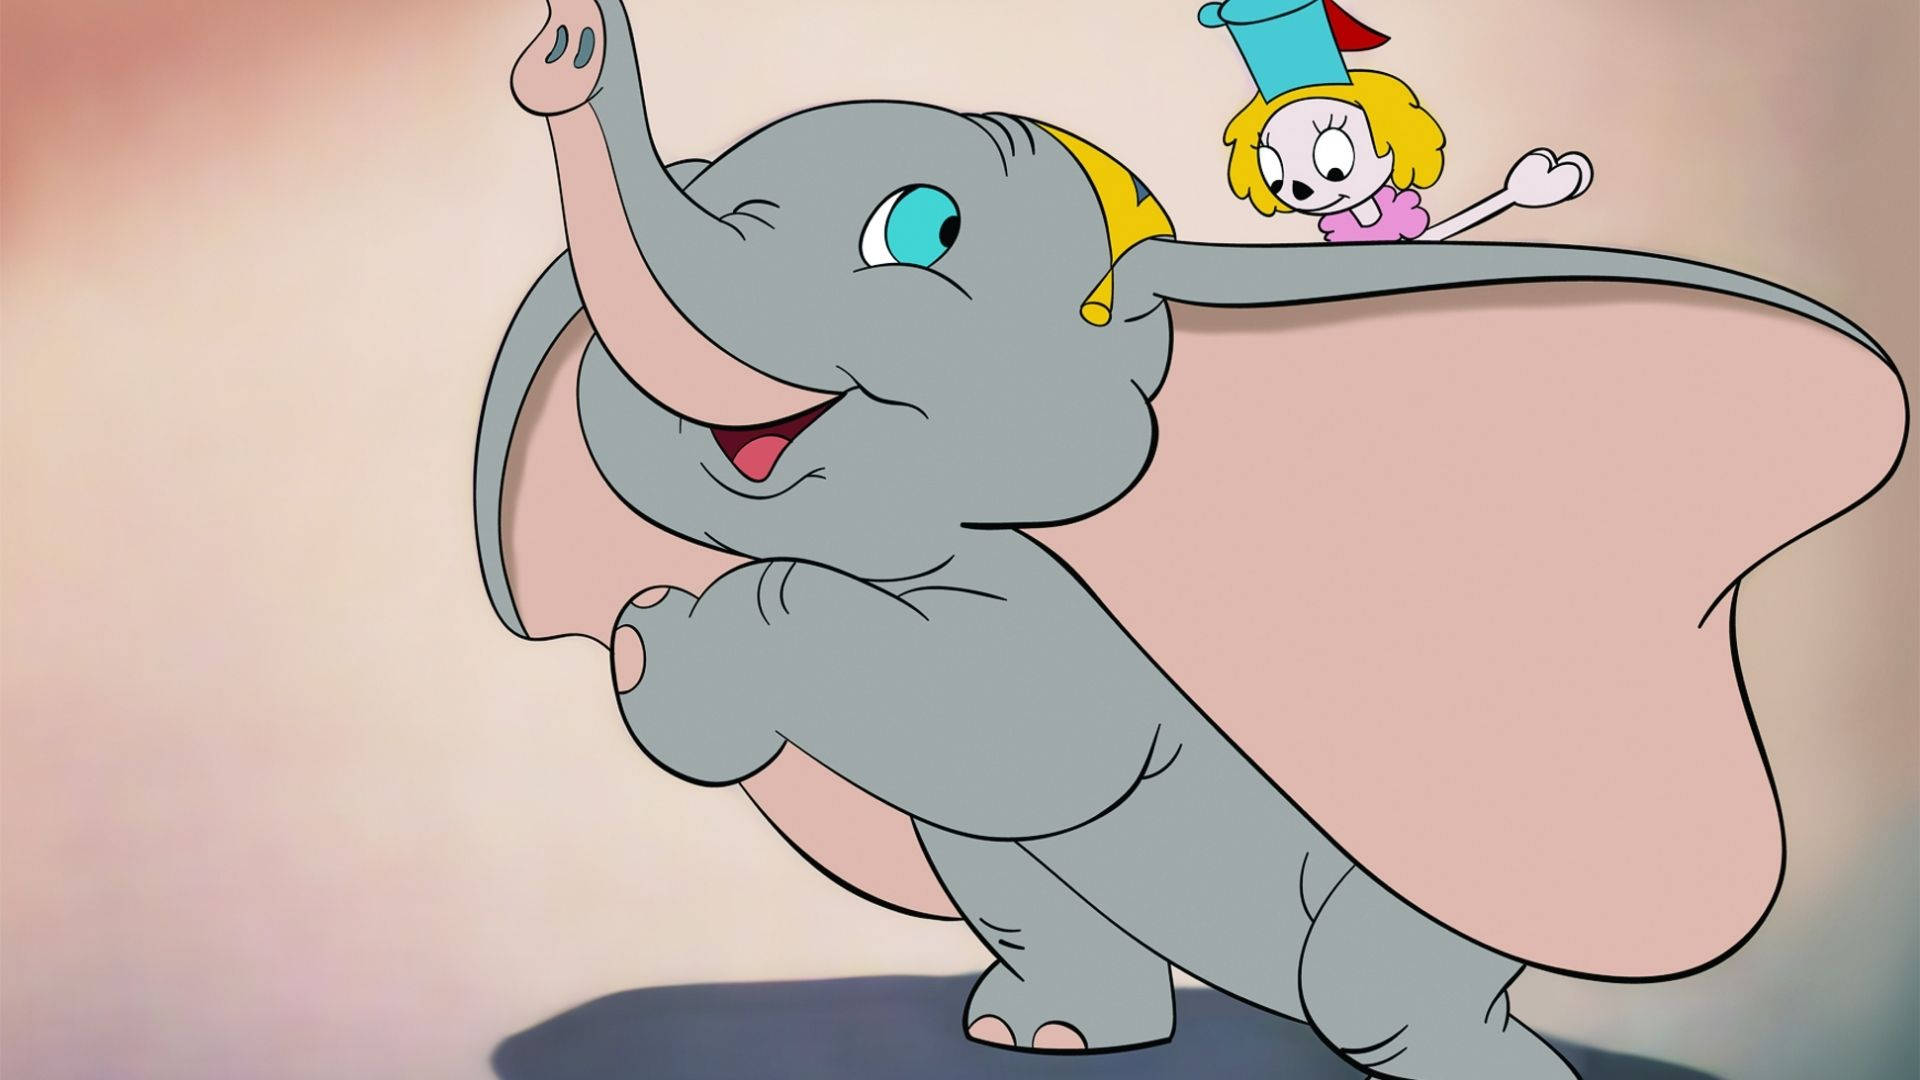 Playful Baby Dumbo Wallpaper